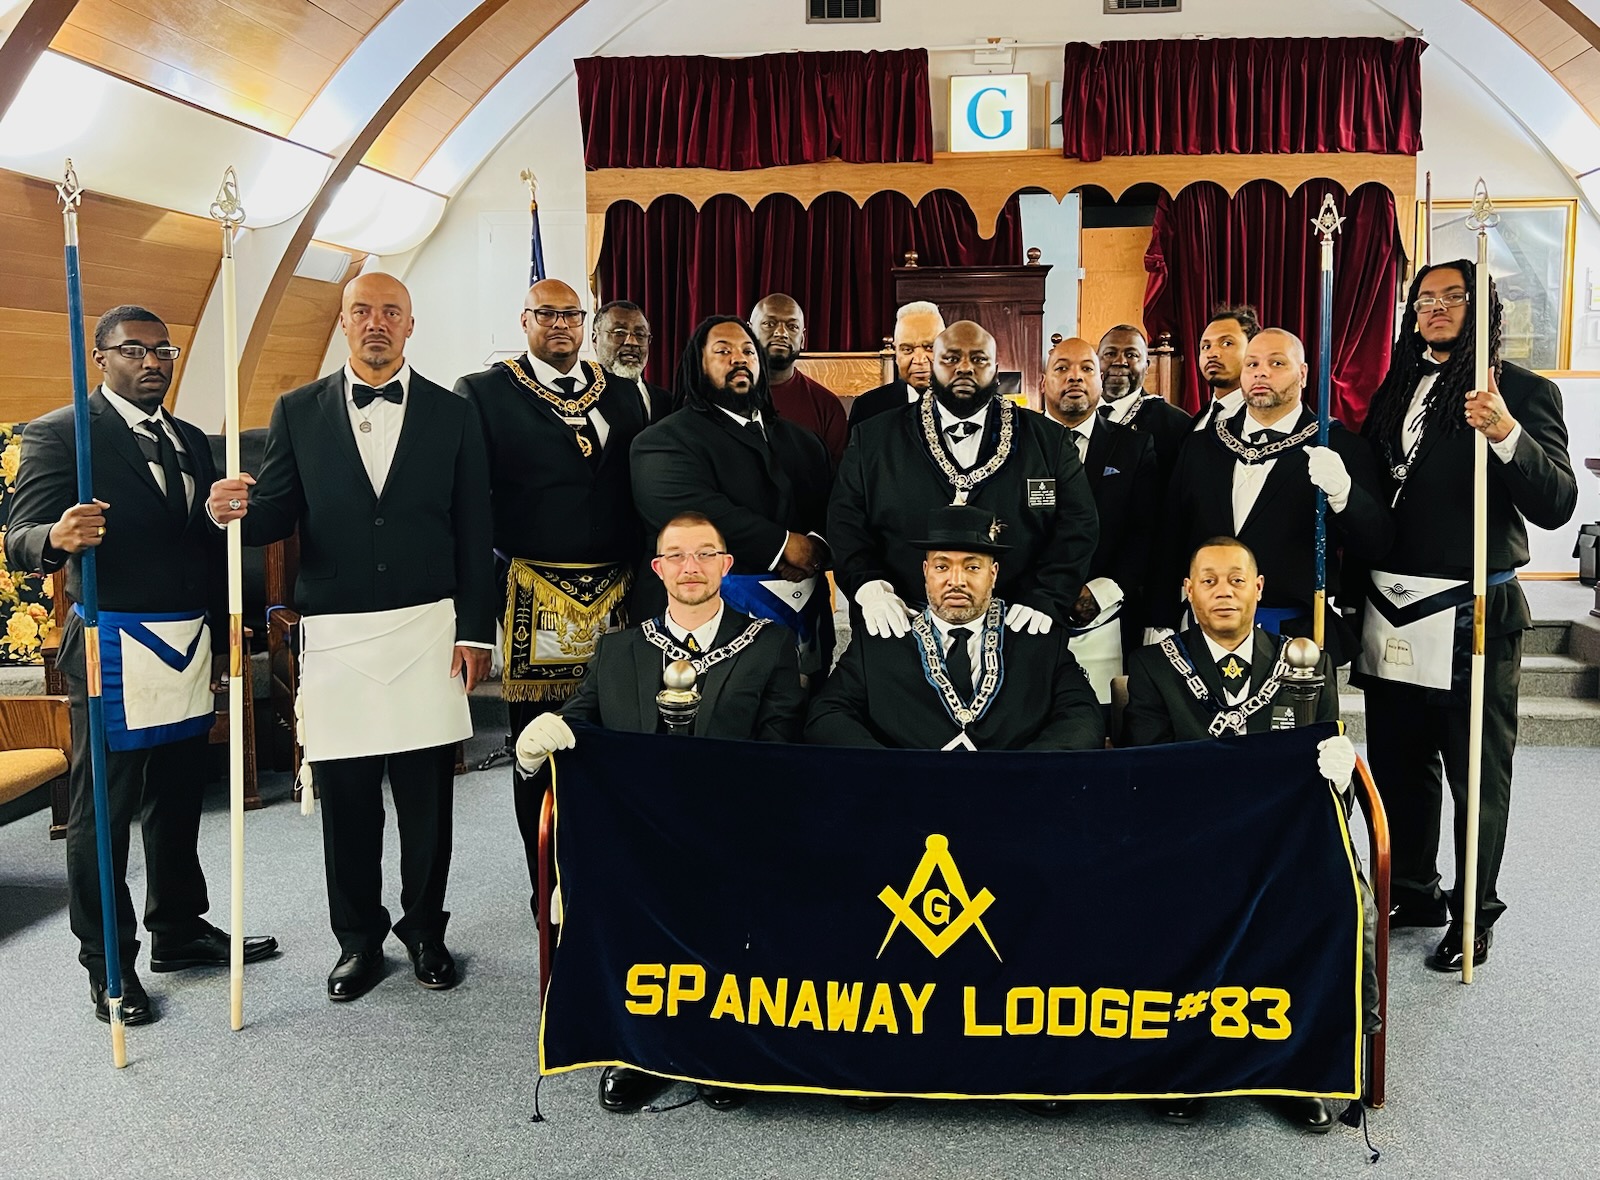 Spanaway Lodge #83